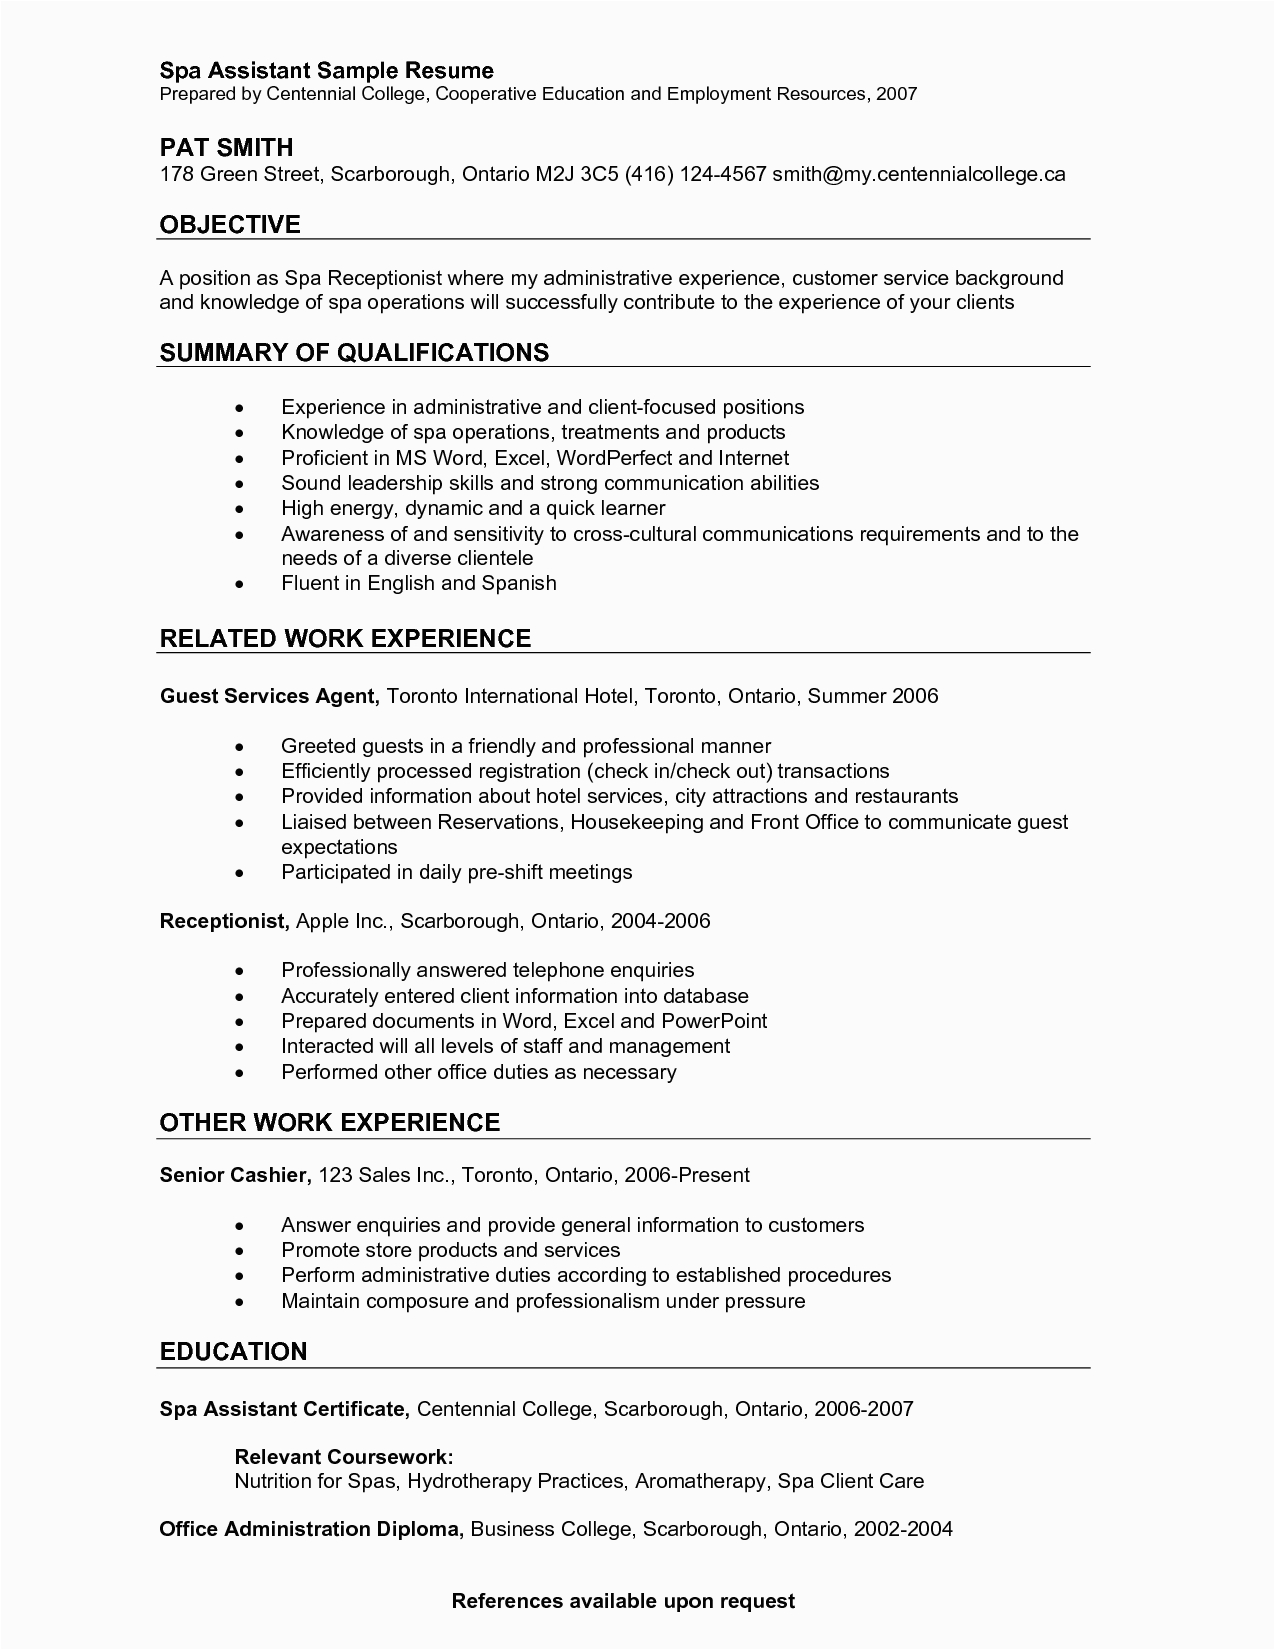 Sample Resume Objectives for Medical Receptionist Medical Receptionist Resume Objective Samples